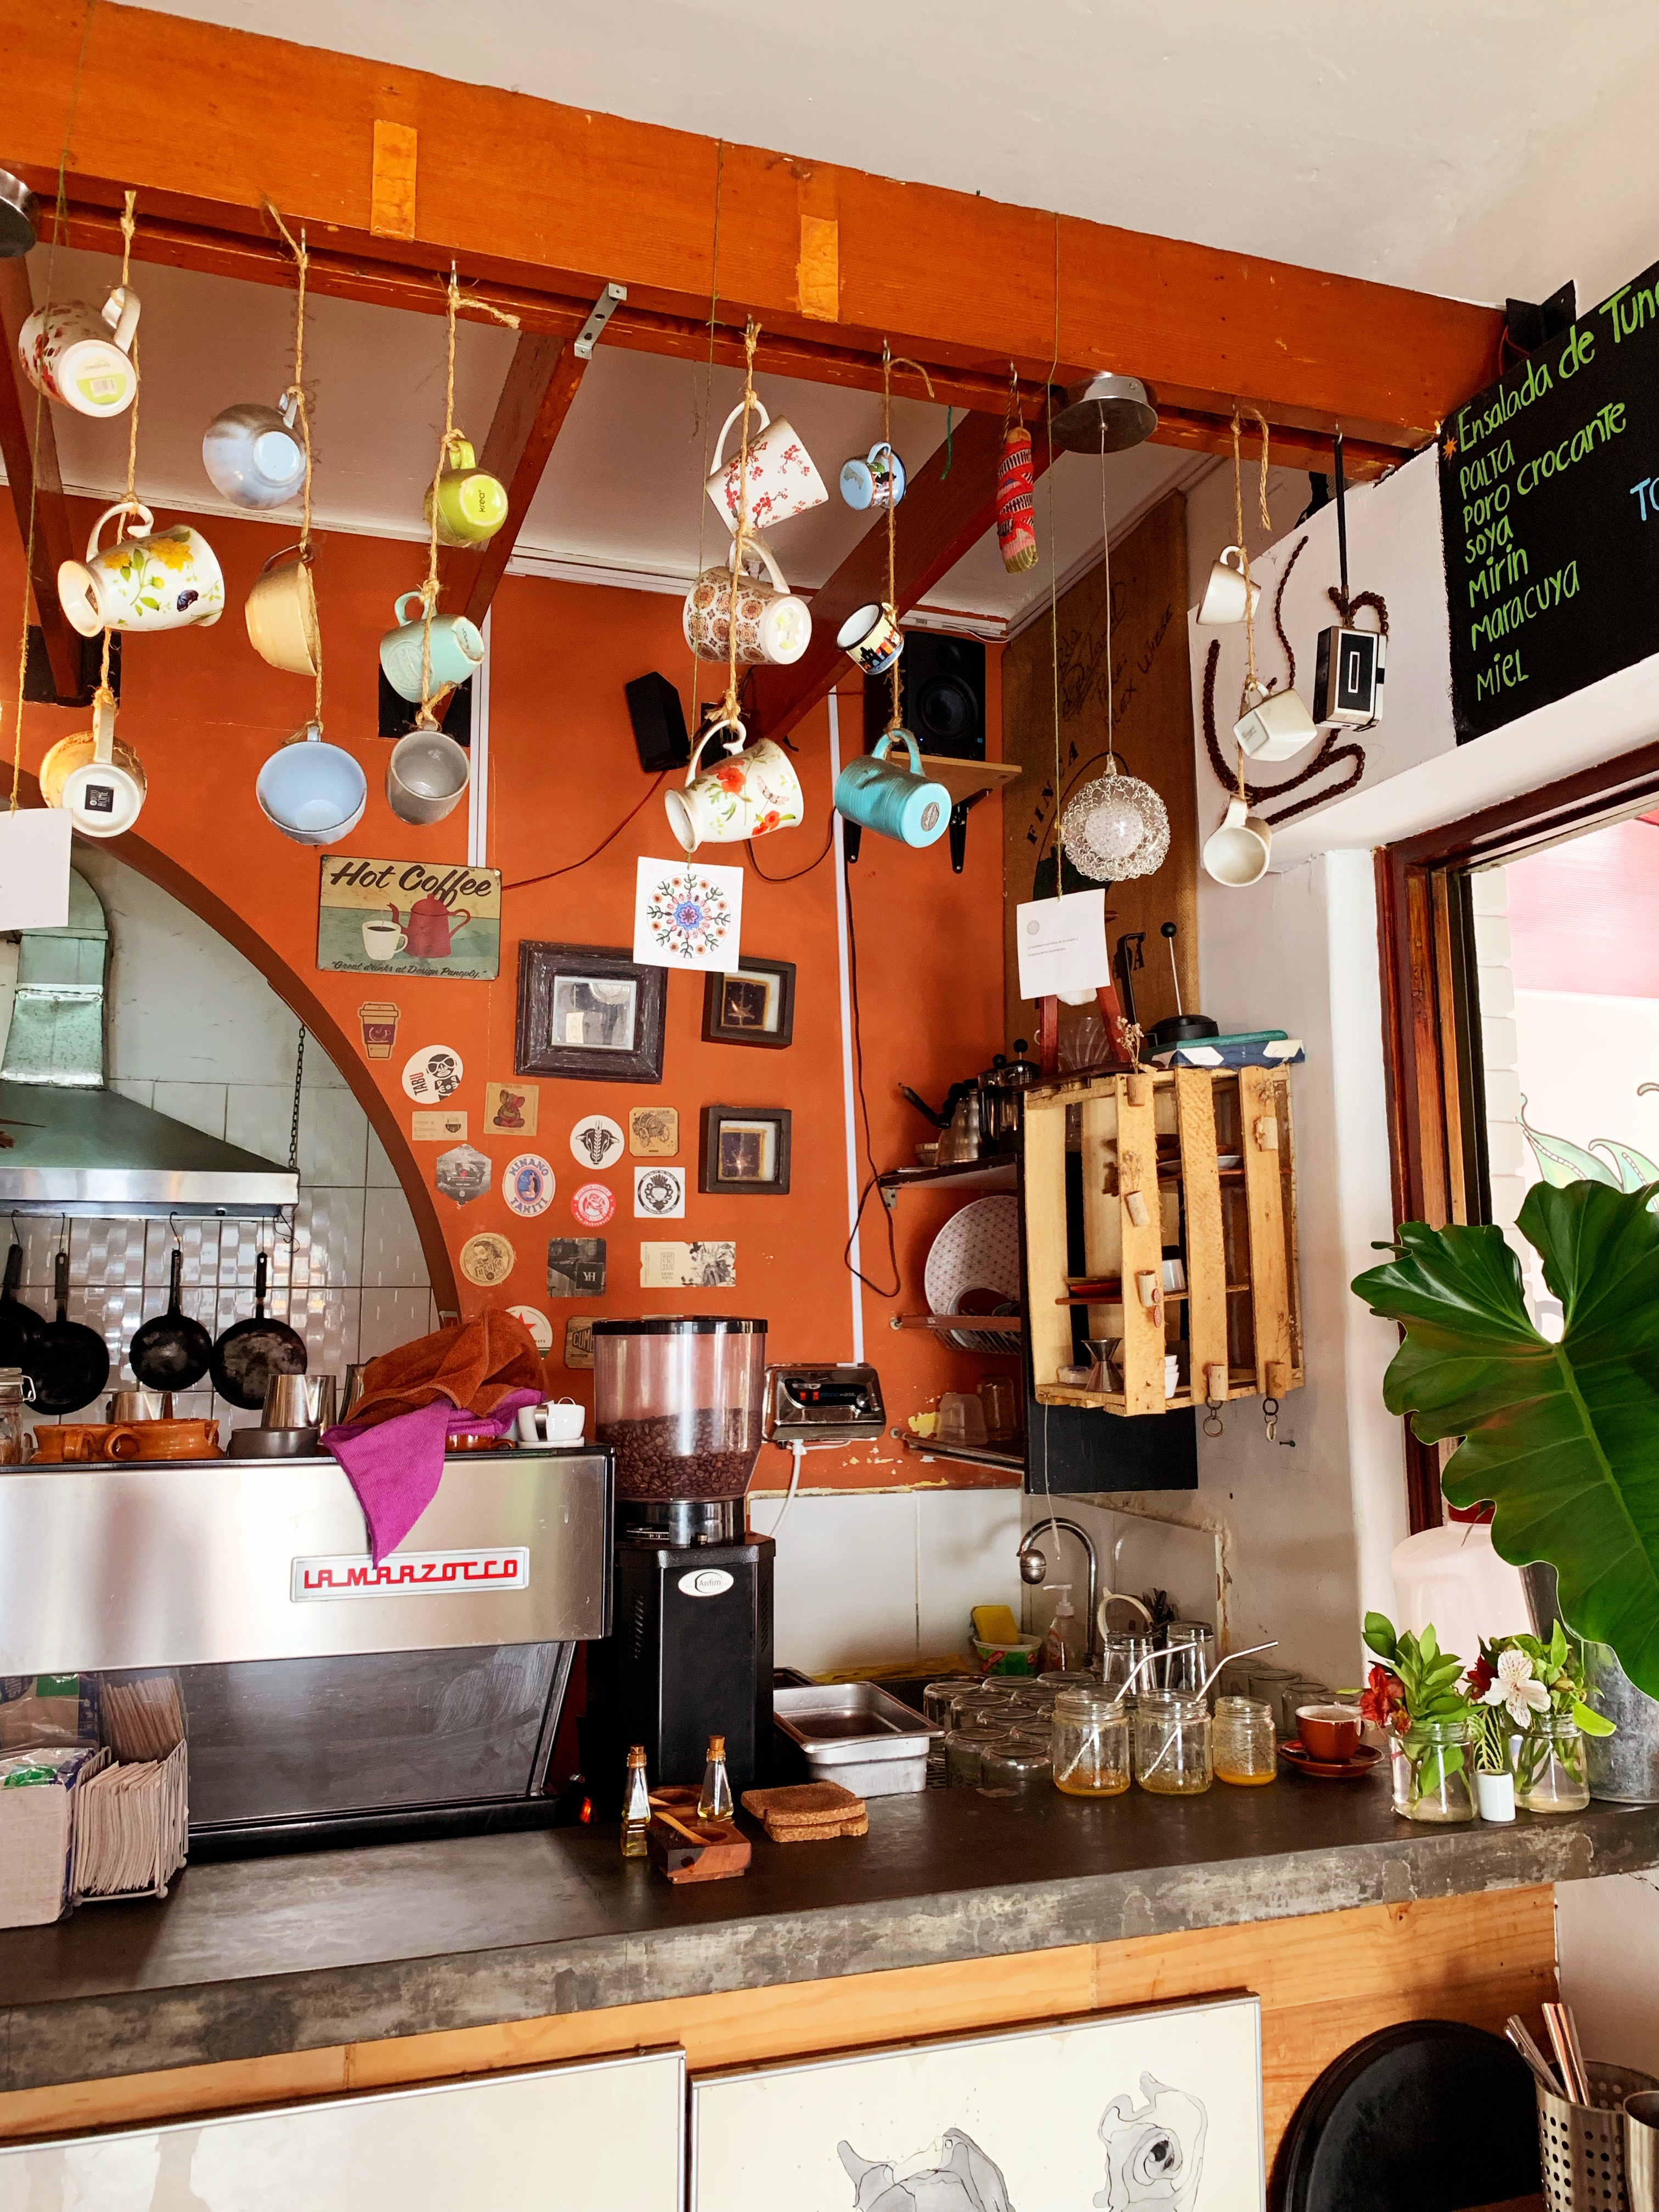 La Posteria Cafe in Miraflores